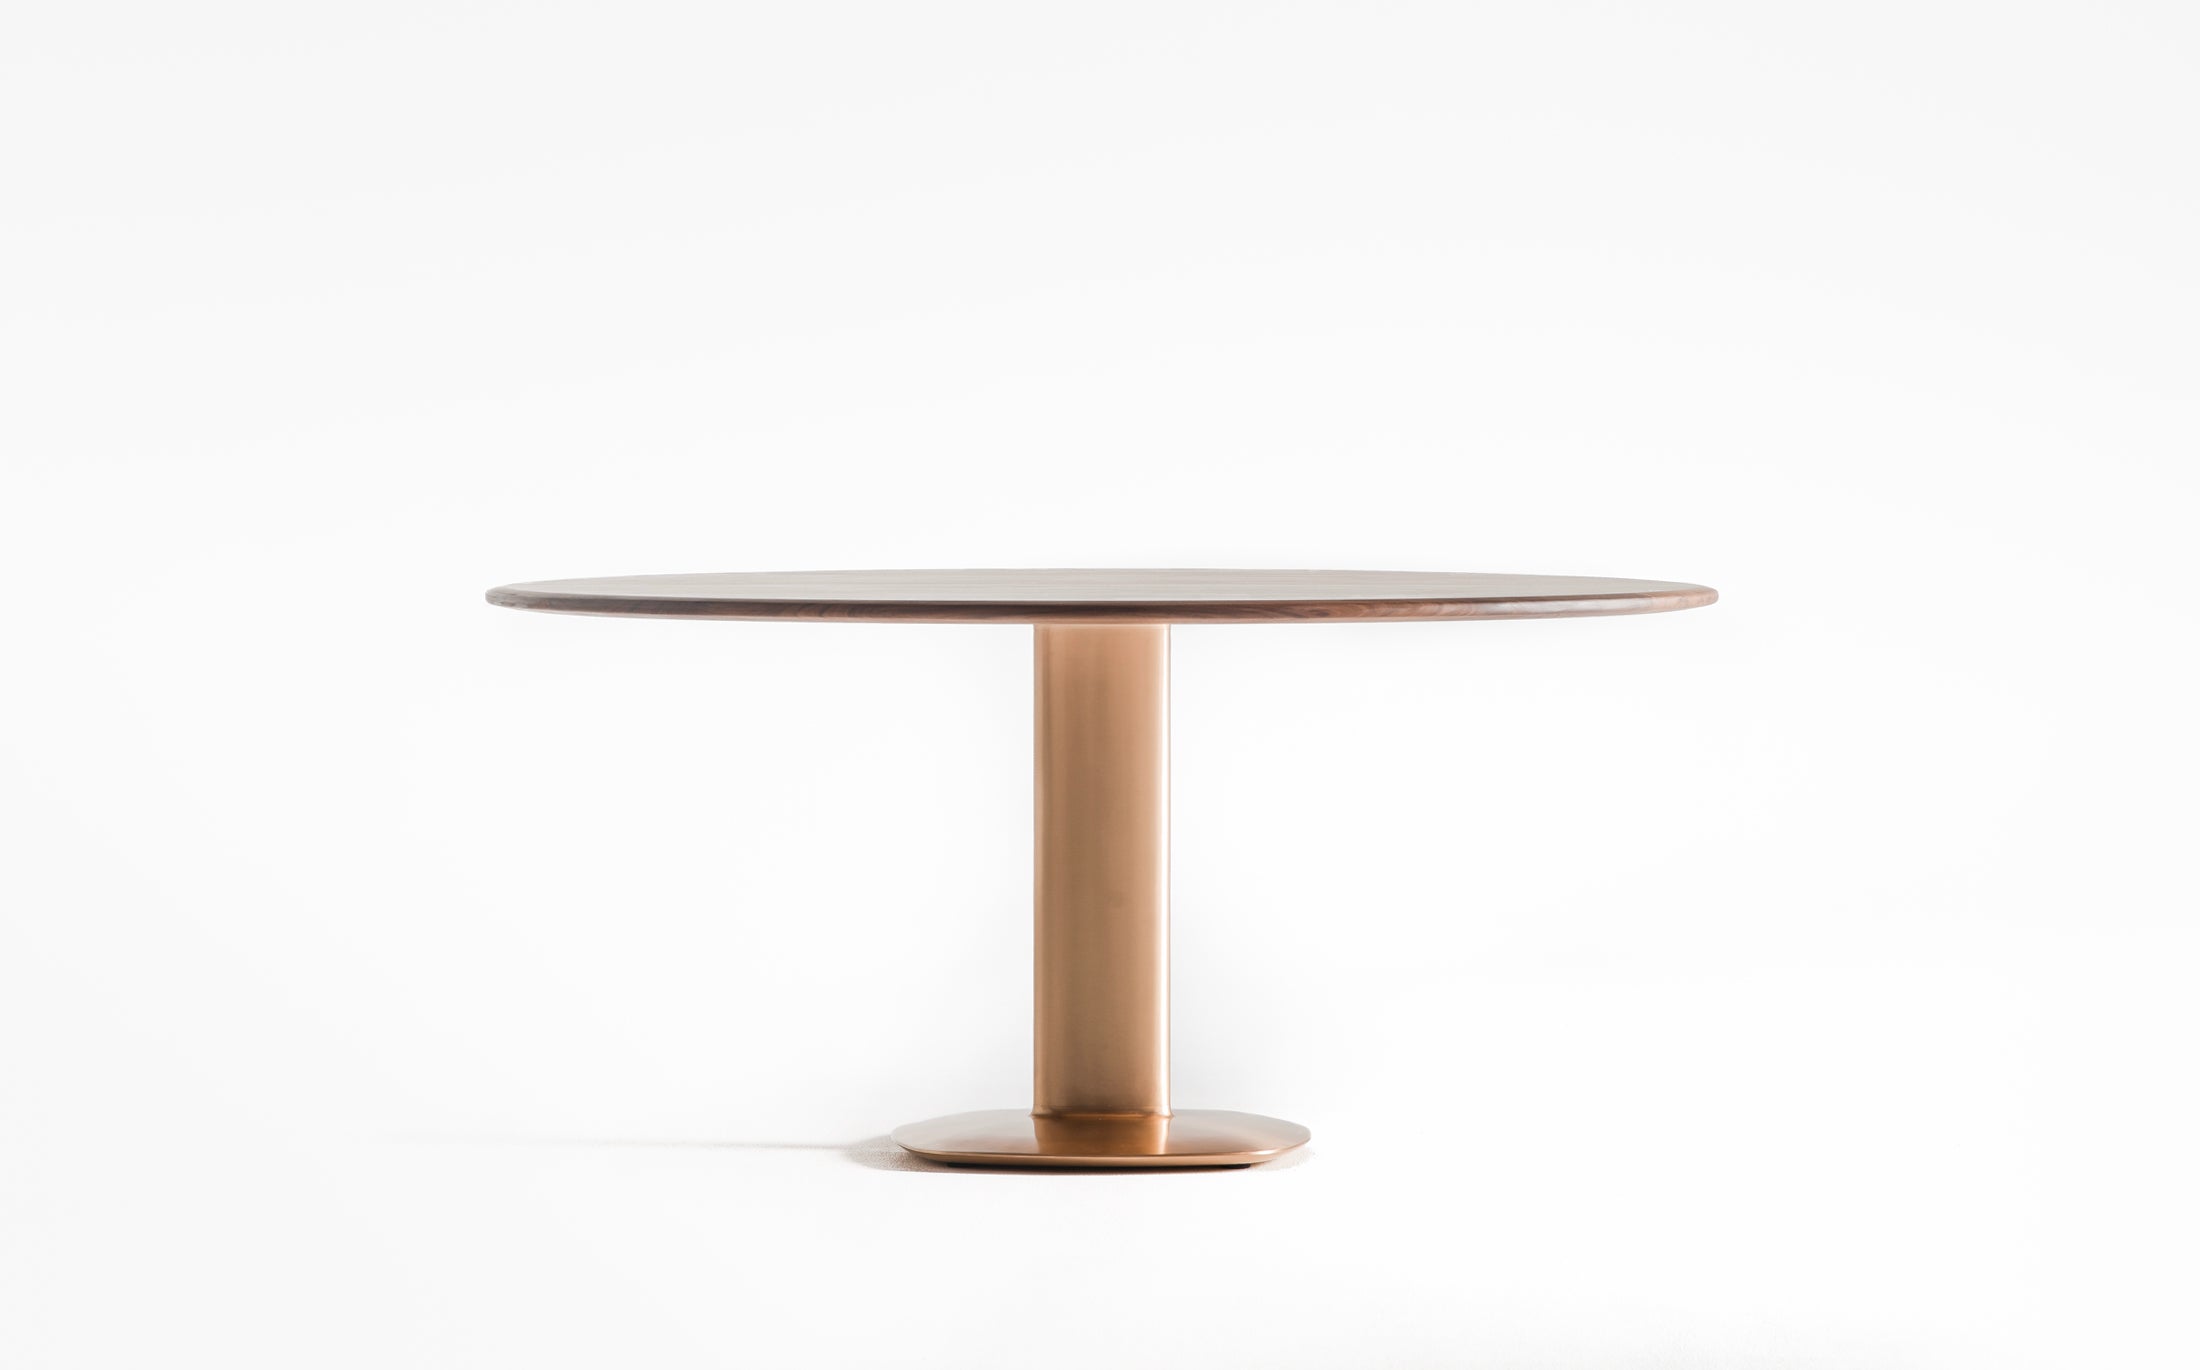 The bronze oval pillar table T-612 Walnut